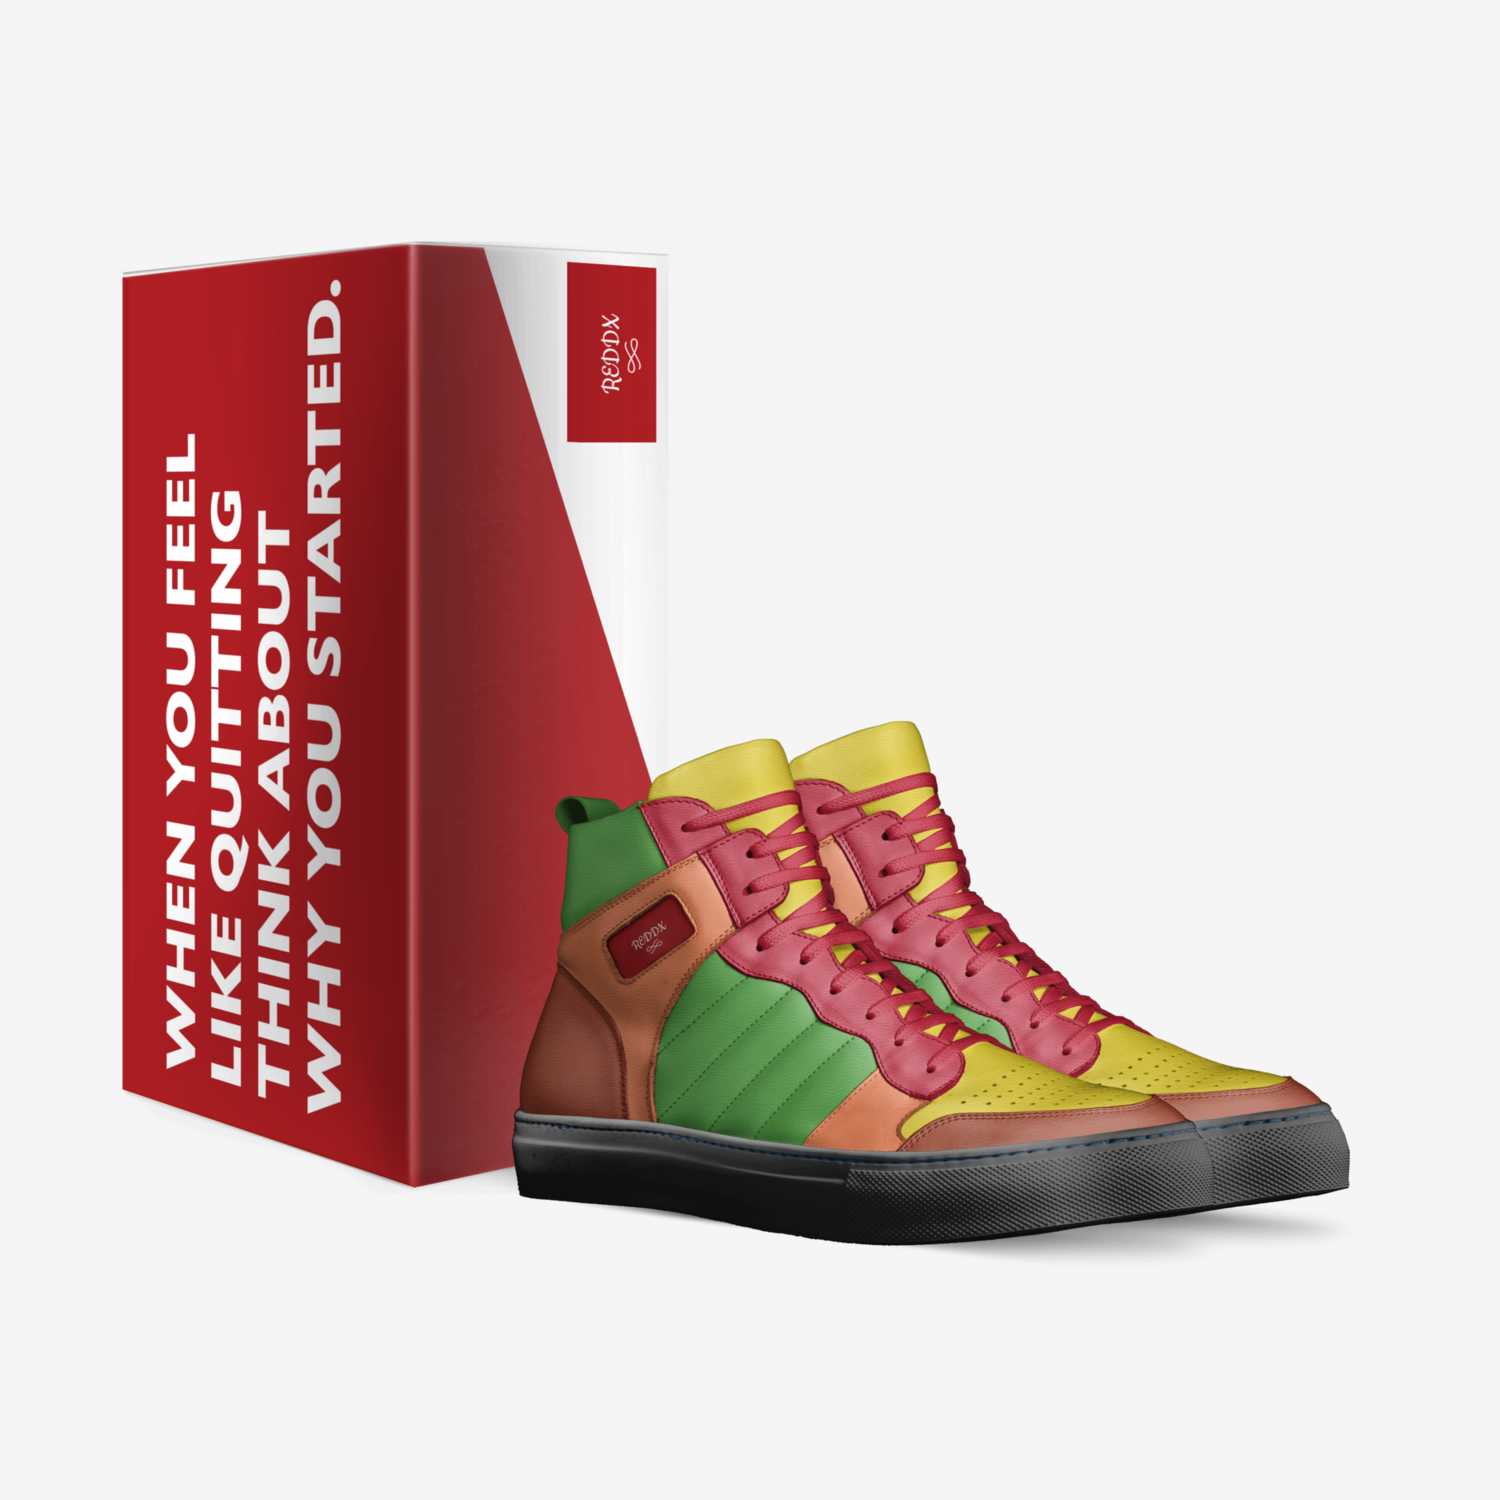 REDDX custom made in Italy shoes by Xavierdawson | Box view